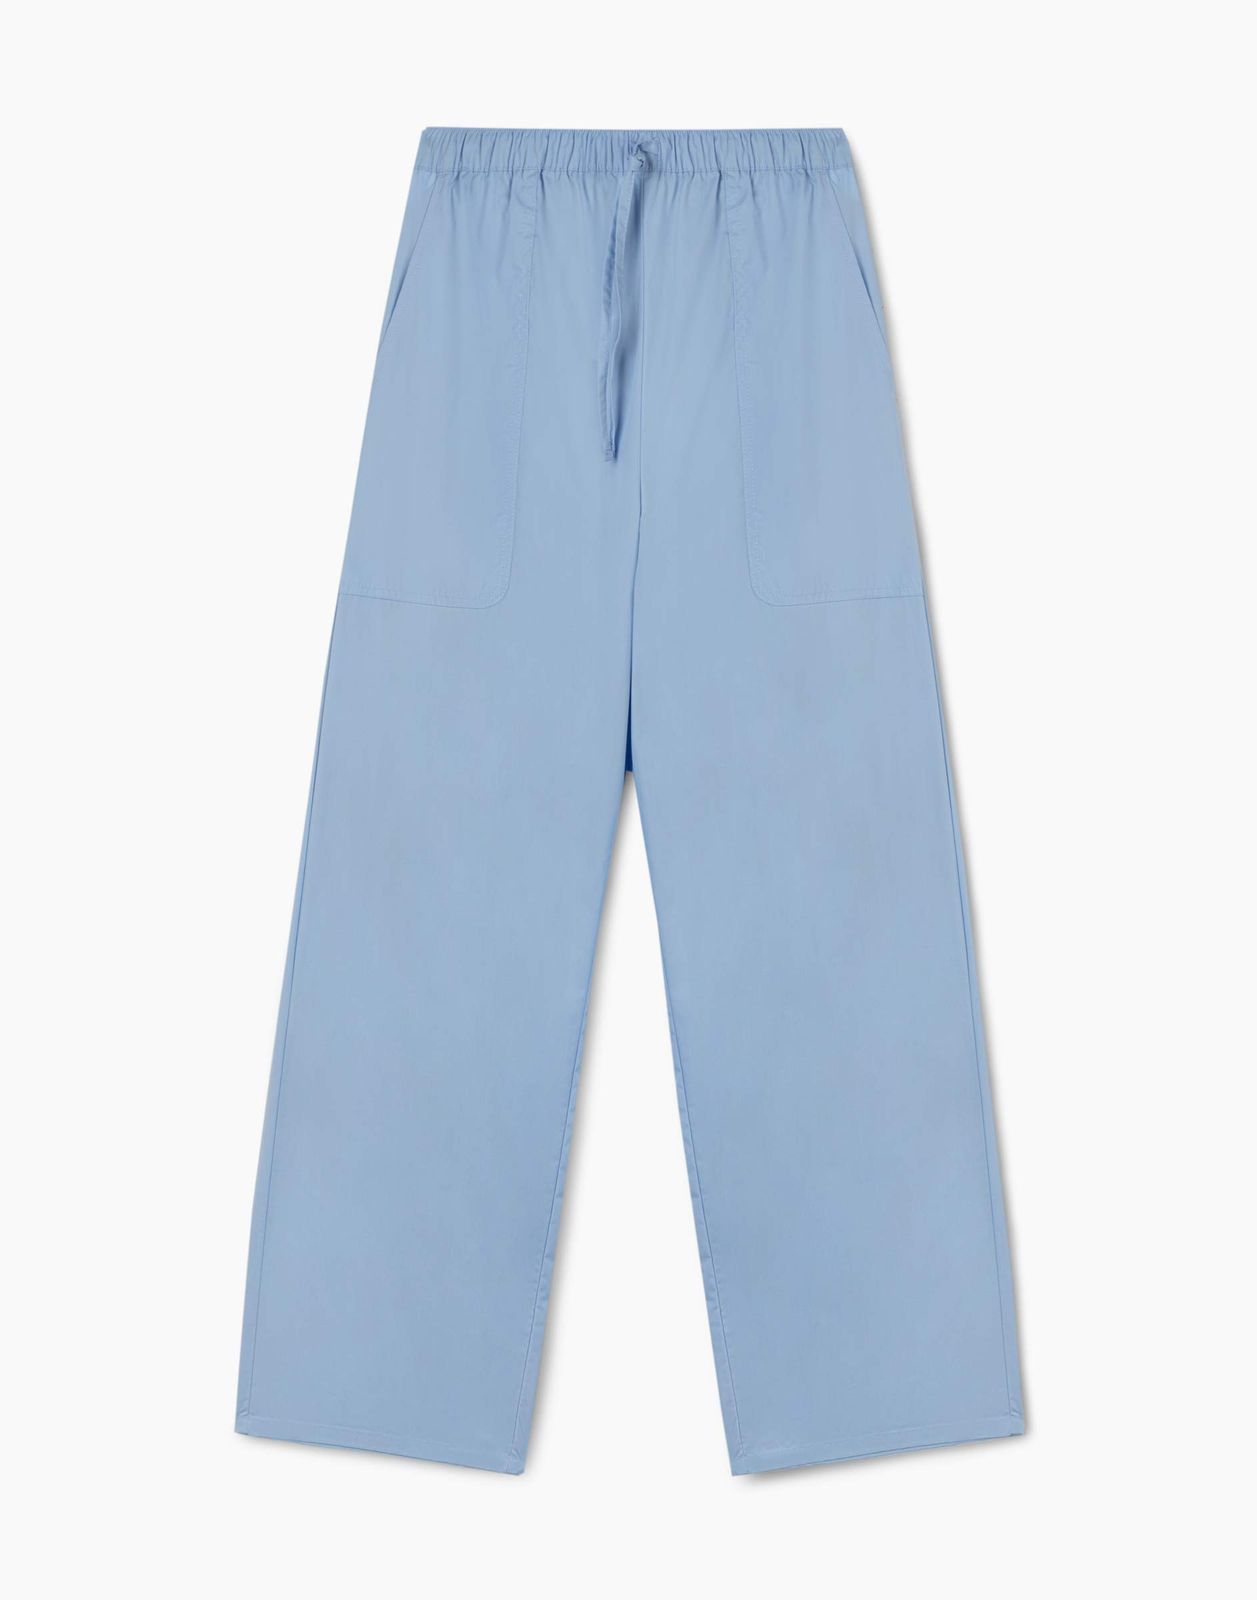 Брюки женские Gloria Jeans GPT009565 голубой M/170